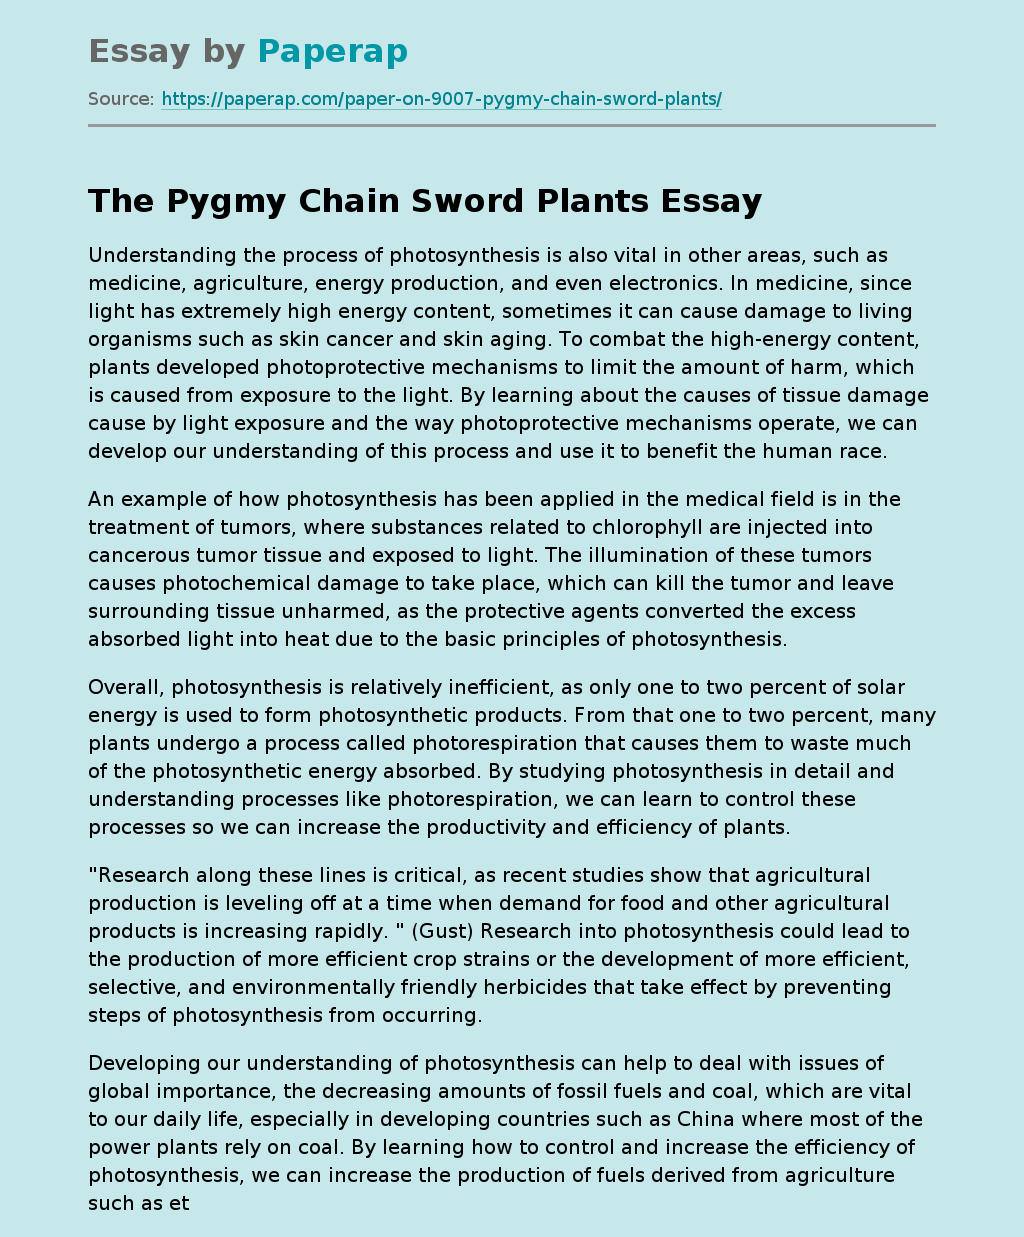 The Pygmy Chain Sword Plants